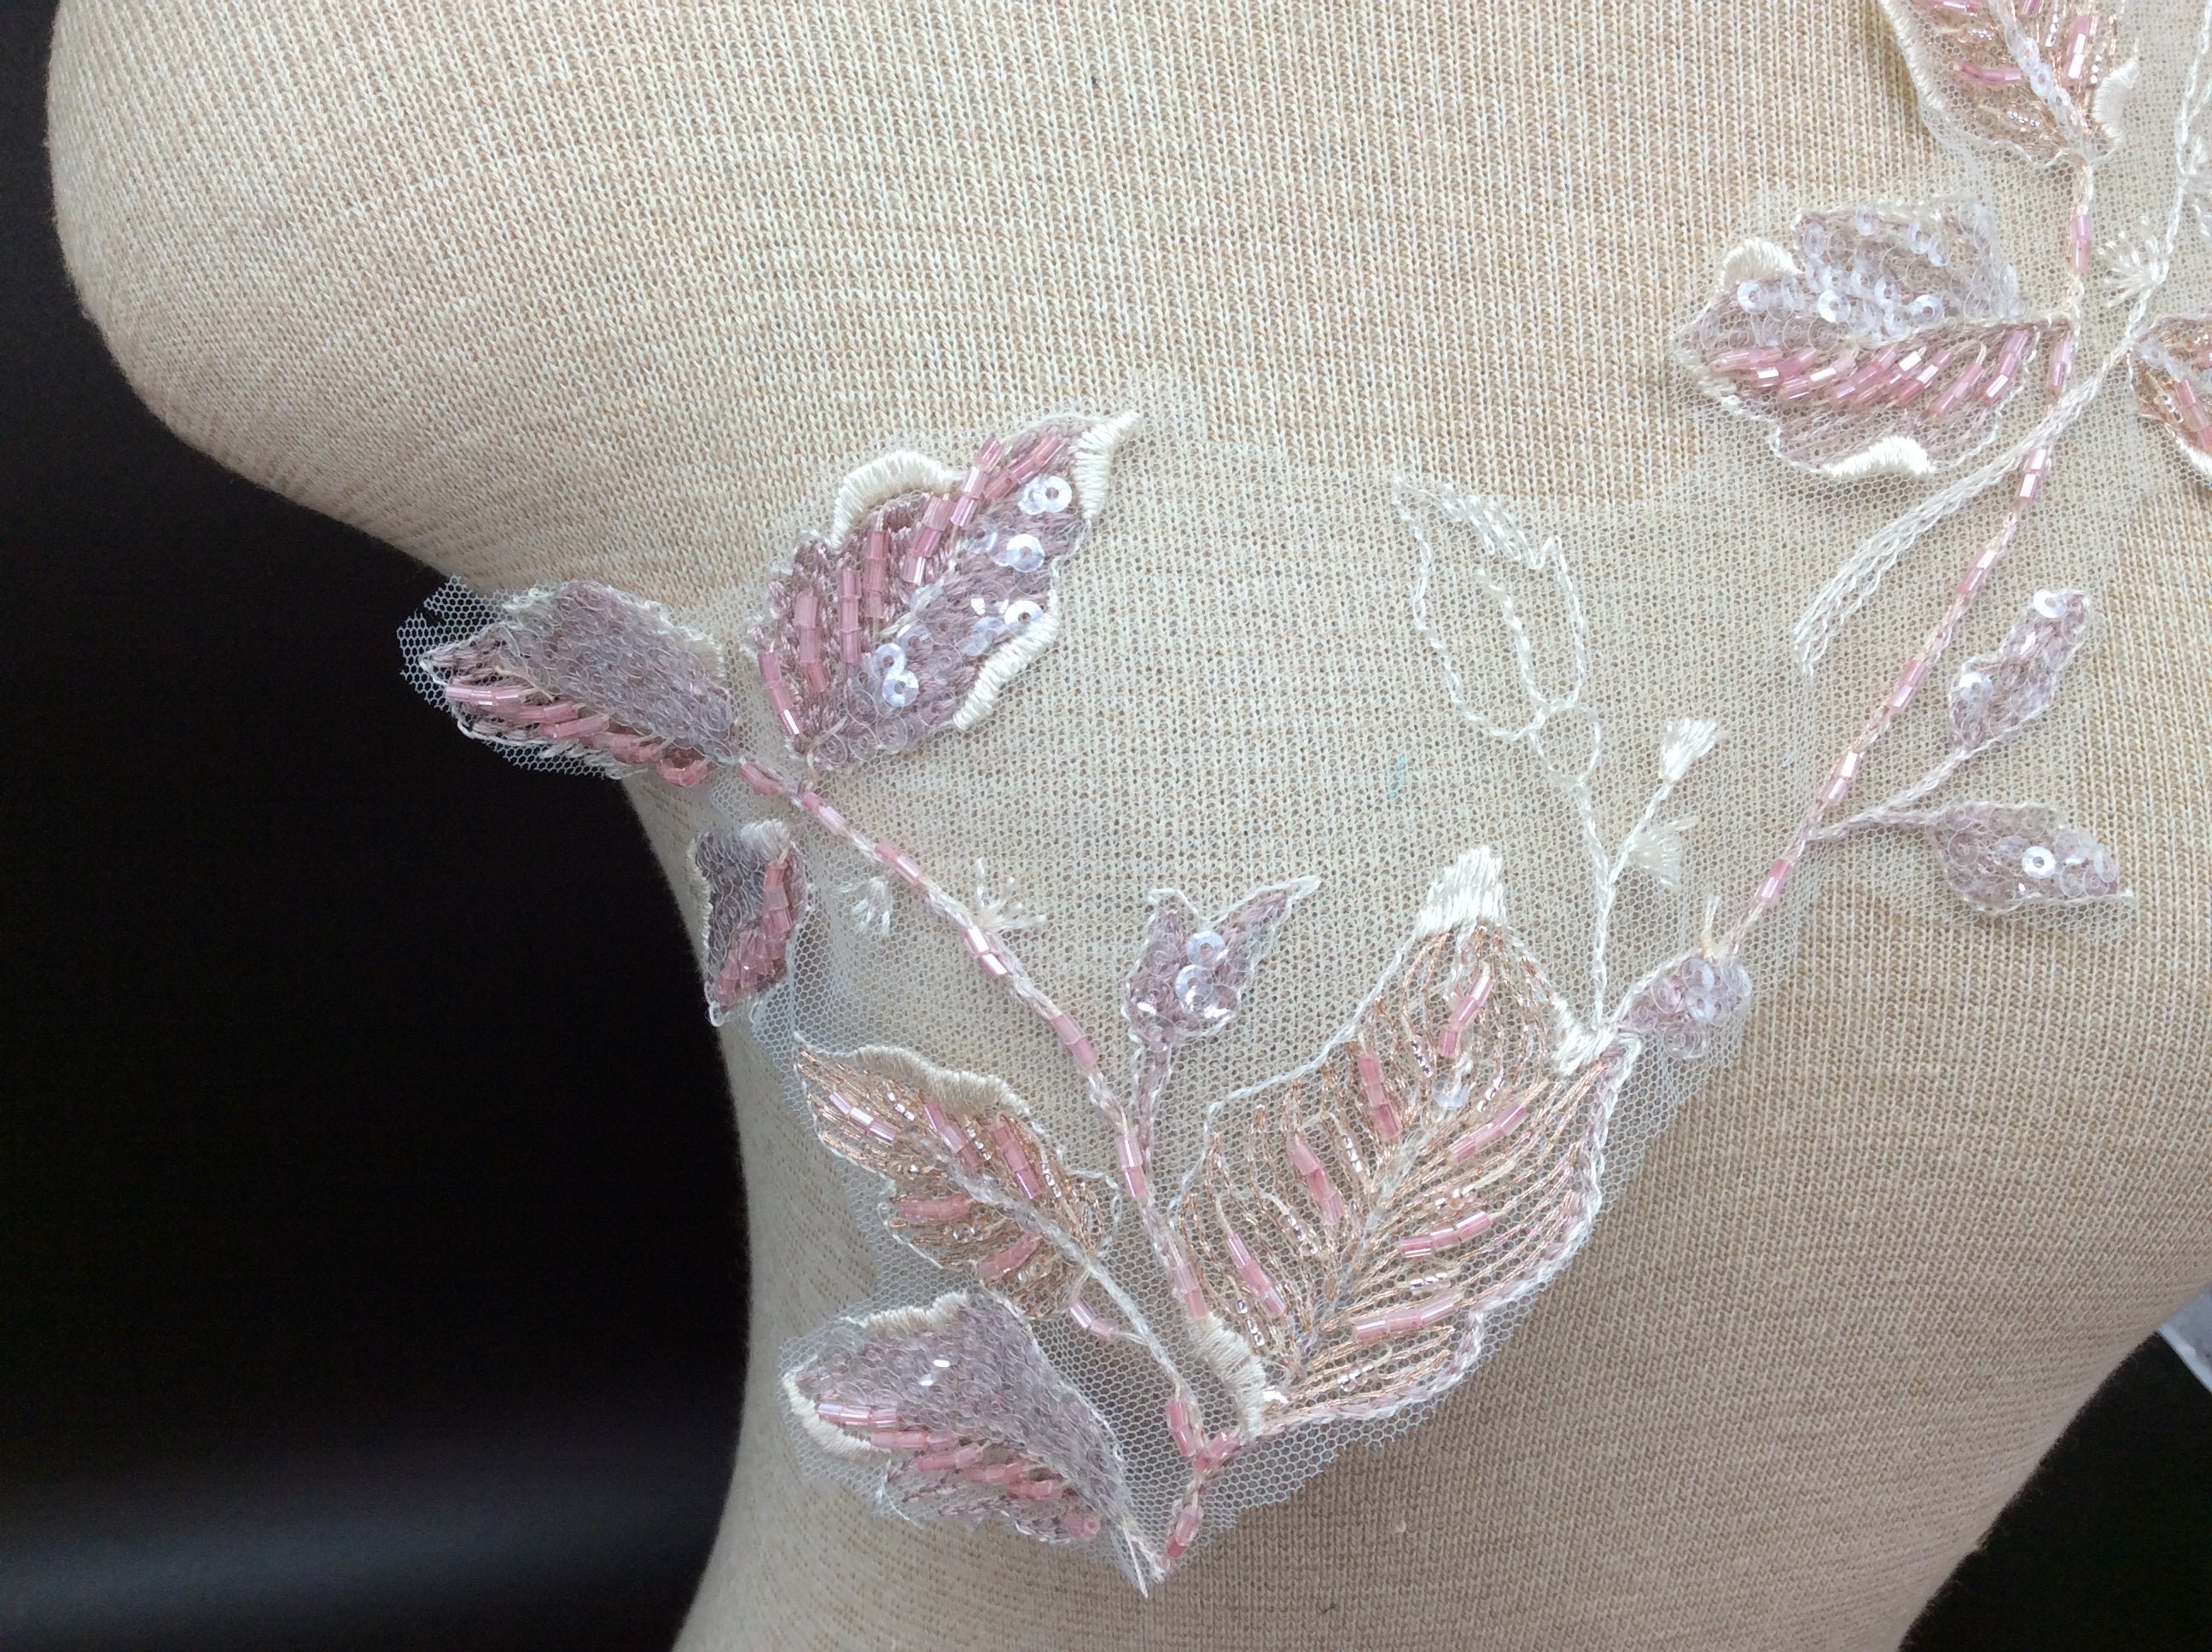 bridal appliques,pink lace remnant pink floral applique pink beaded lace applique